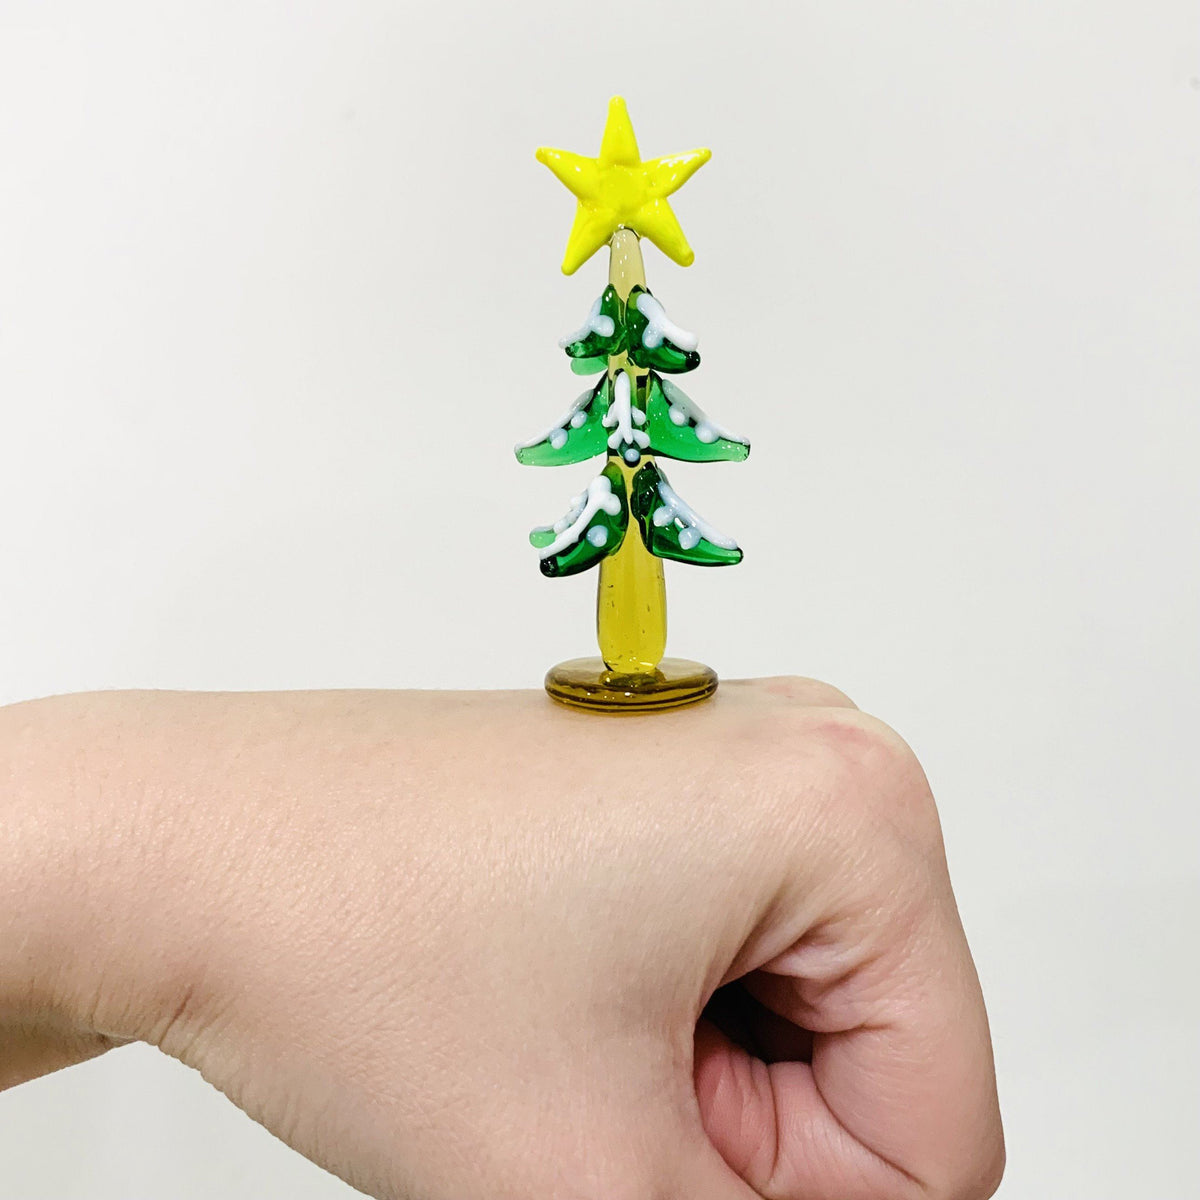 Little Glass Trees, Yellow Star Miniature - 